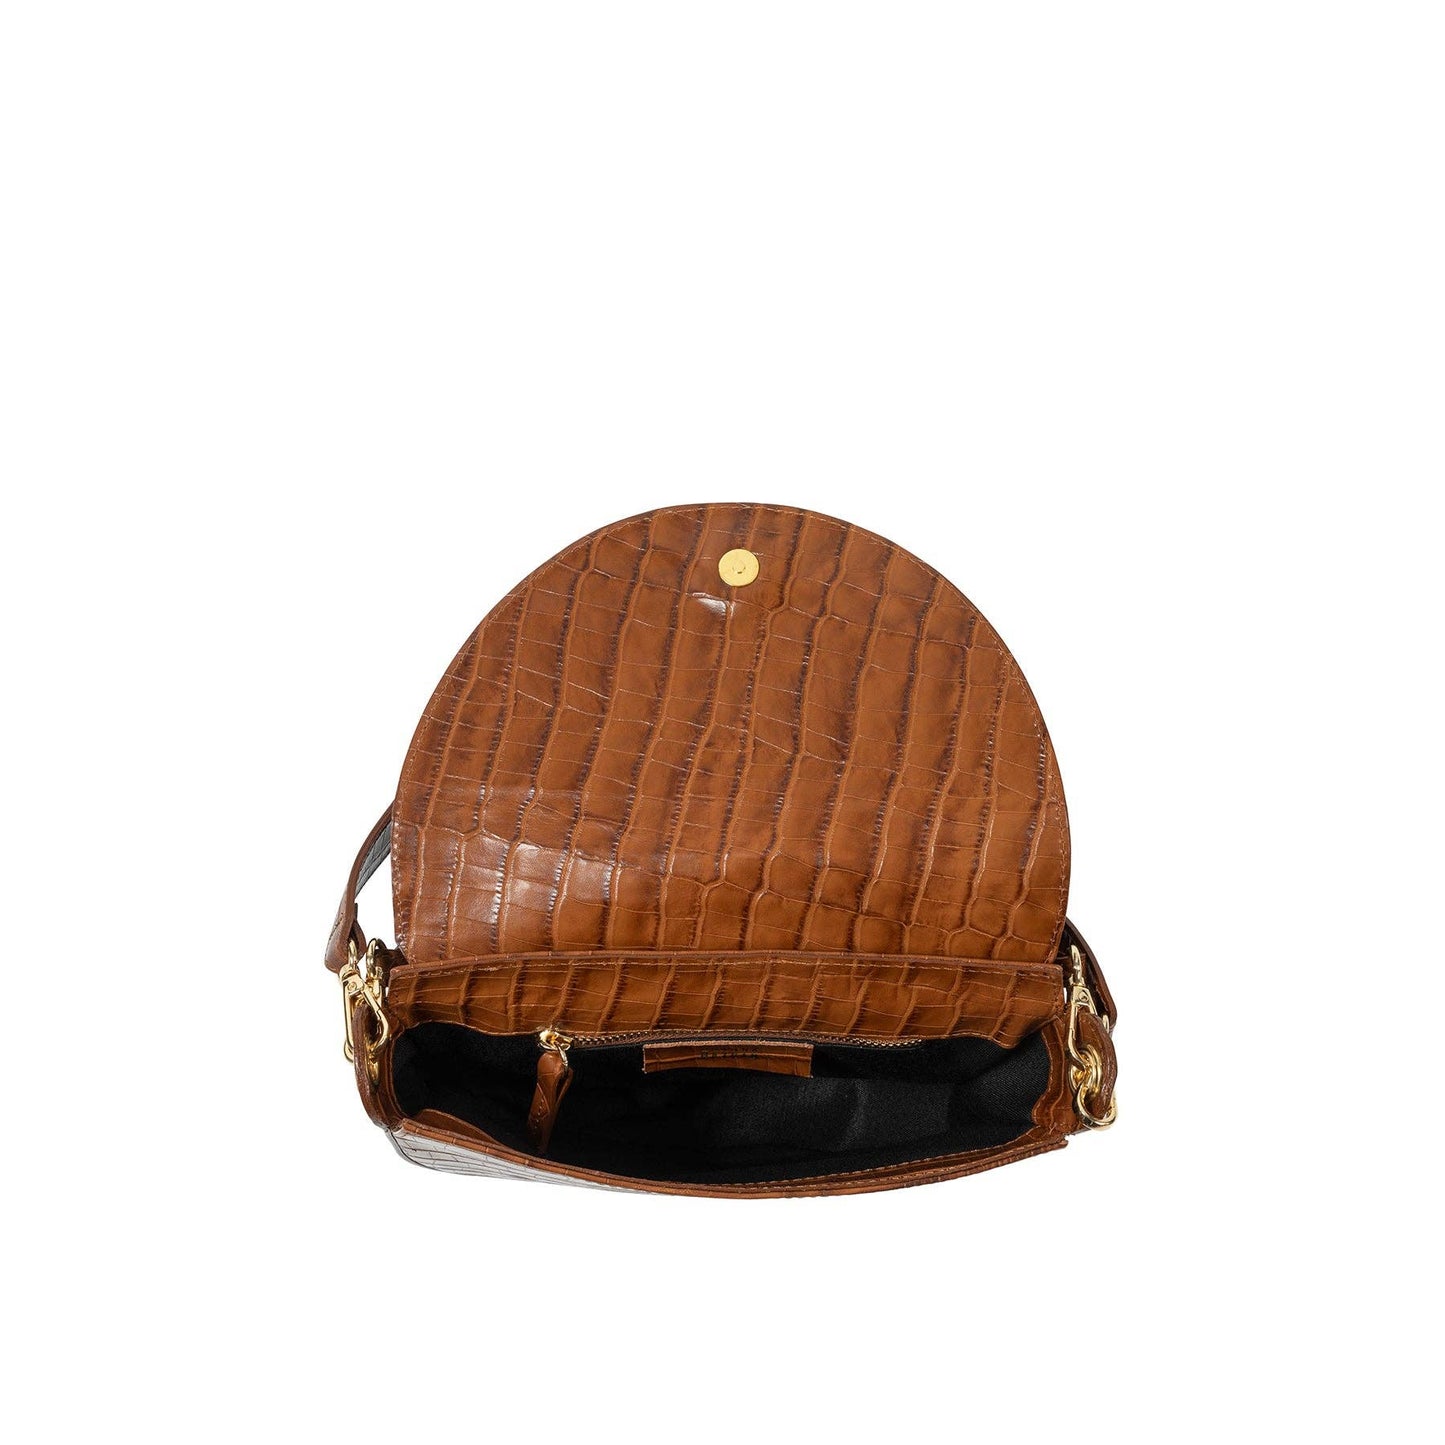 Joanna Maxham: Luxury Designer Handbags - Forget Me Not Saddle Bag (Saddle Croc-Embossed)